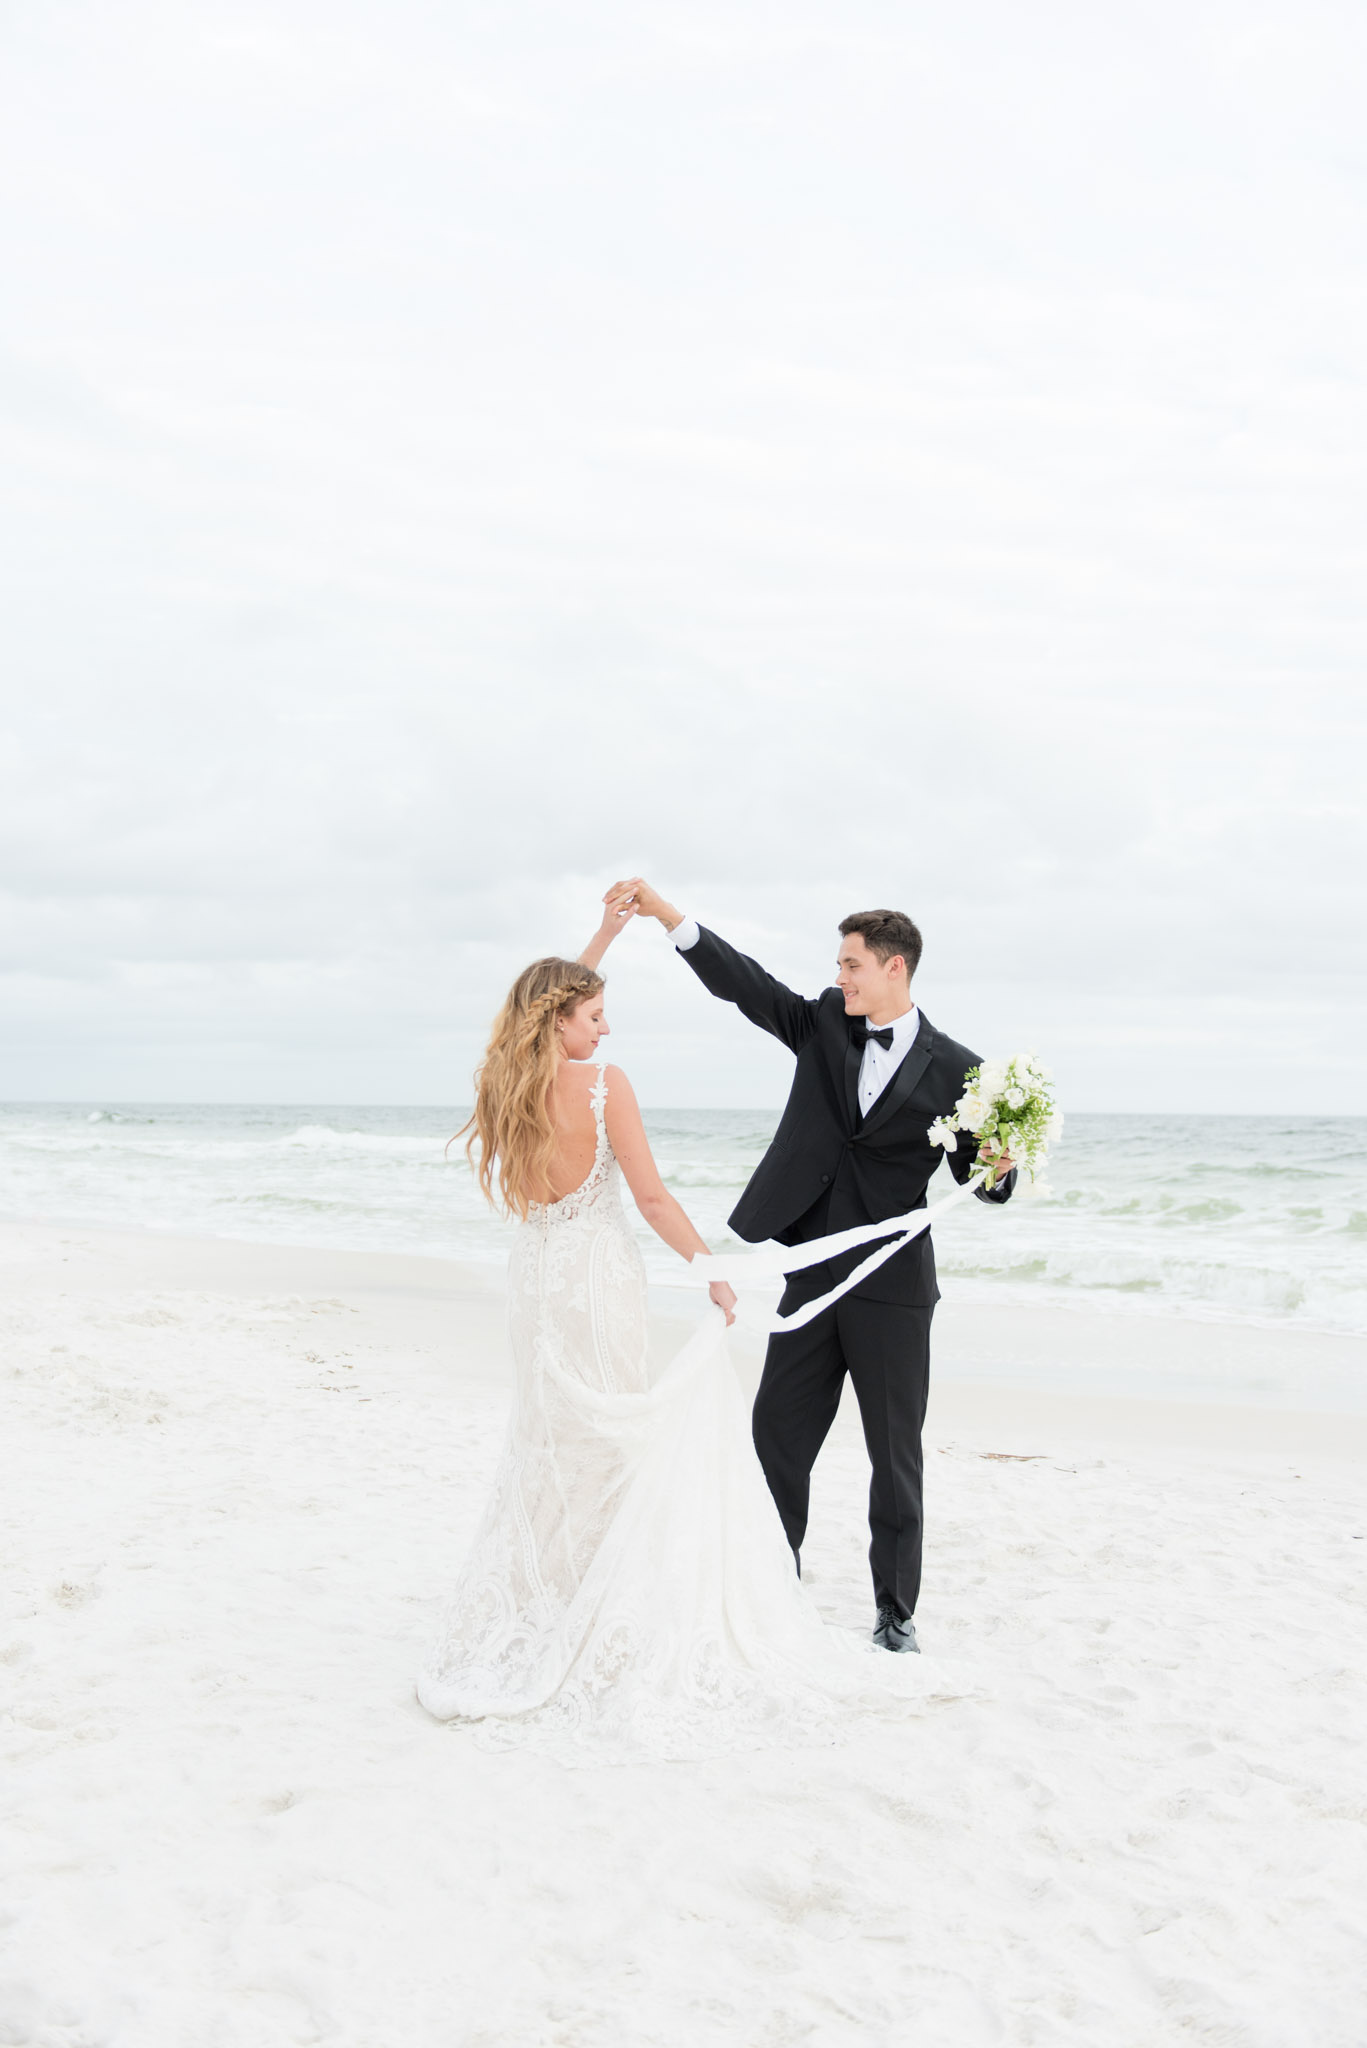 Groom twirls bride on beach.